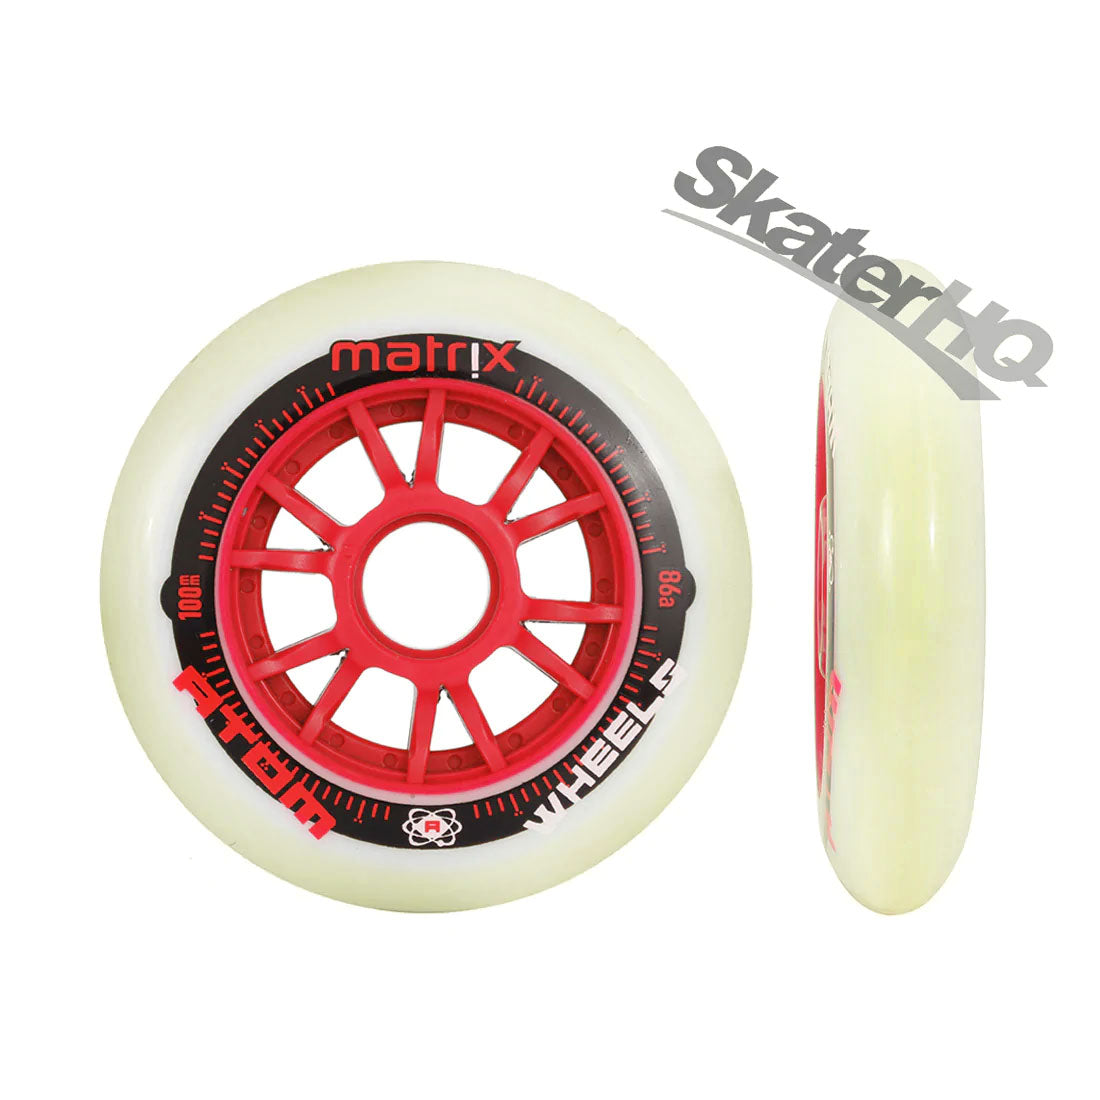 Atom Matrix 100mm 86a 6pk - White/Red (Slightly USED) Inline Rec Wheels